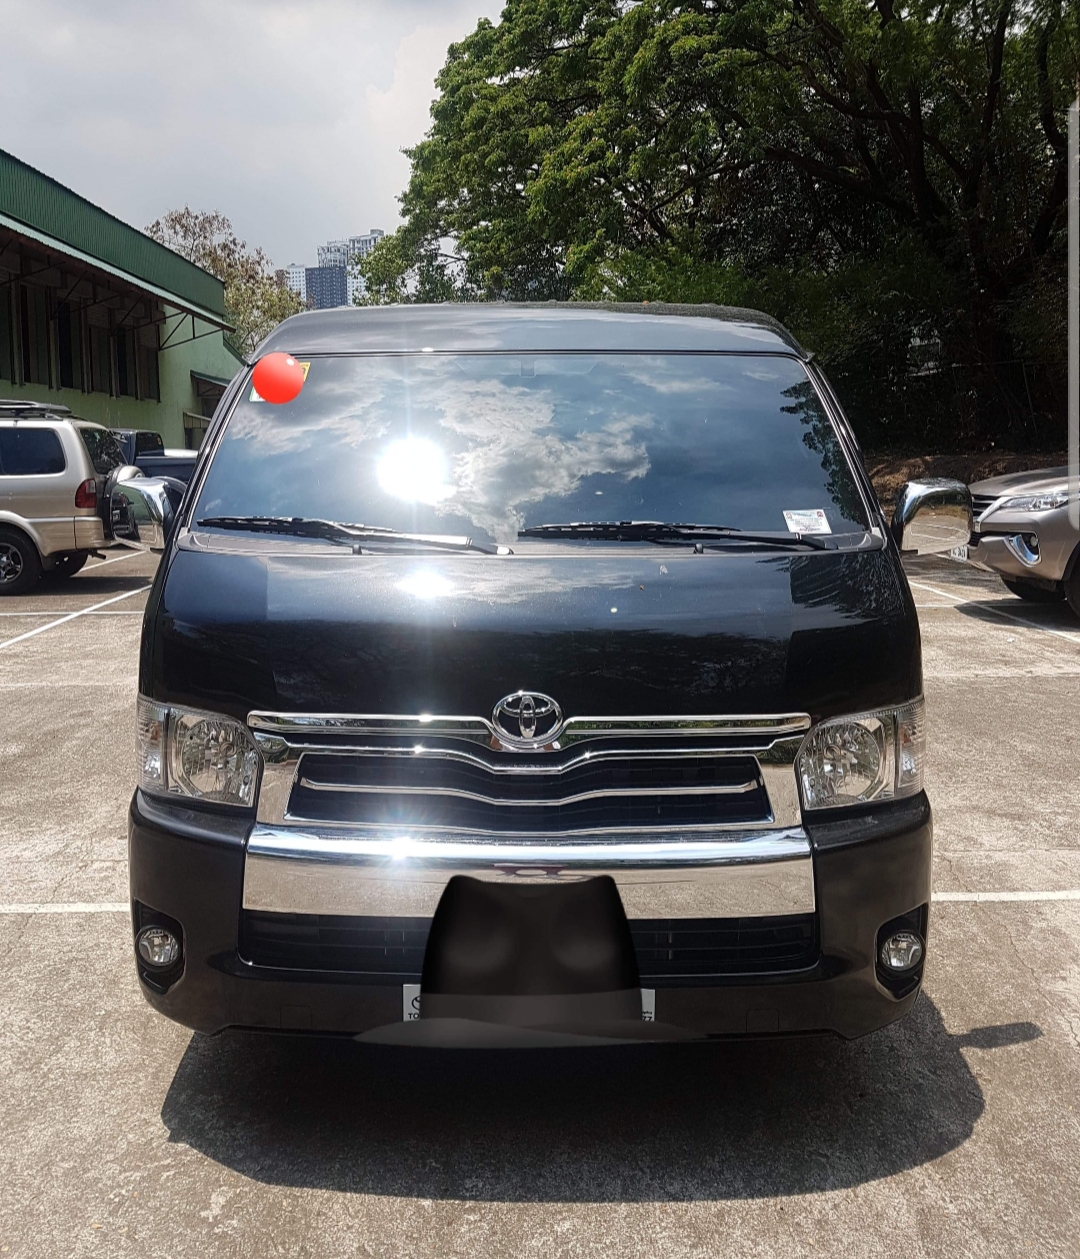 Toyota Super Grandia Rental by LXV
Van /
Makati, Metro Manila

 / Hourly ₱9.00
